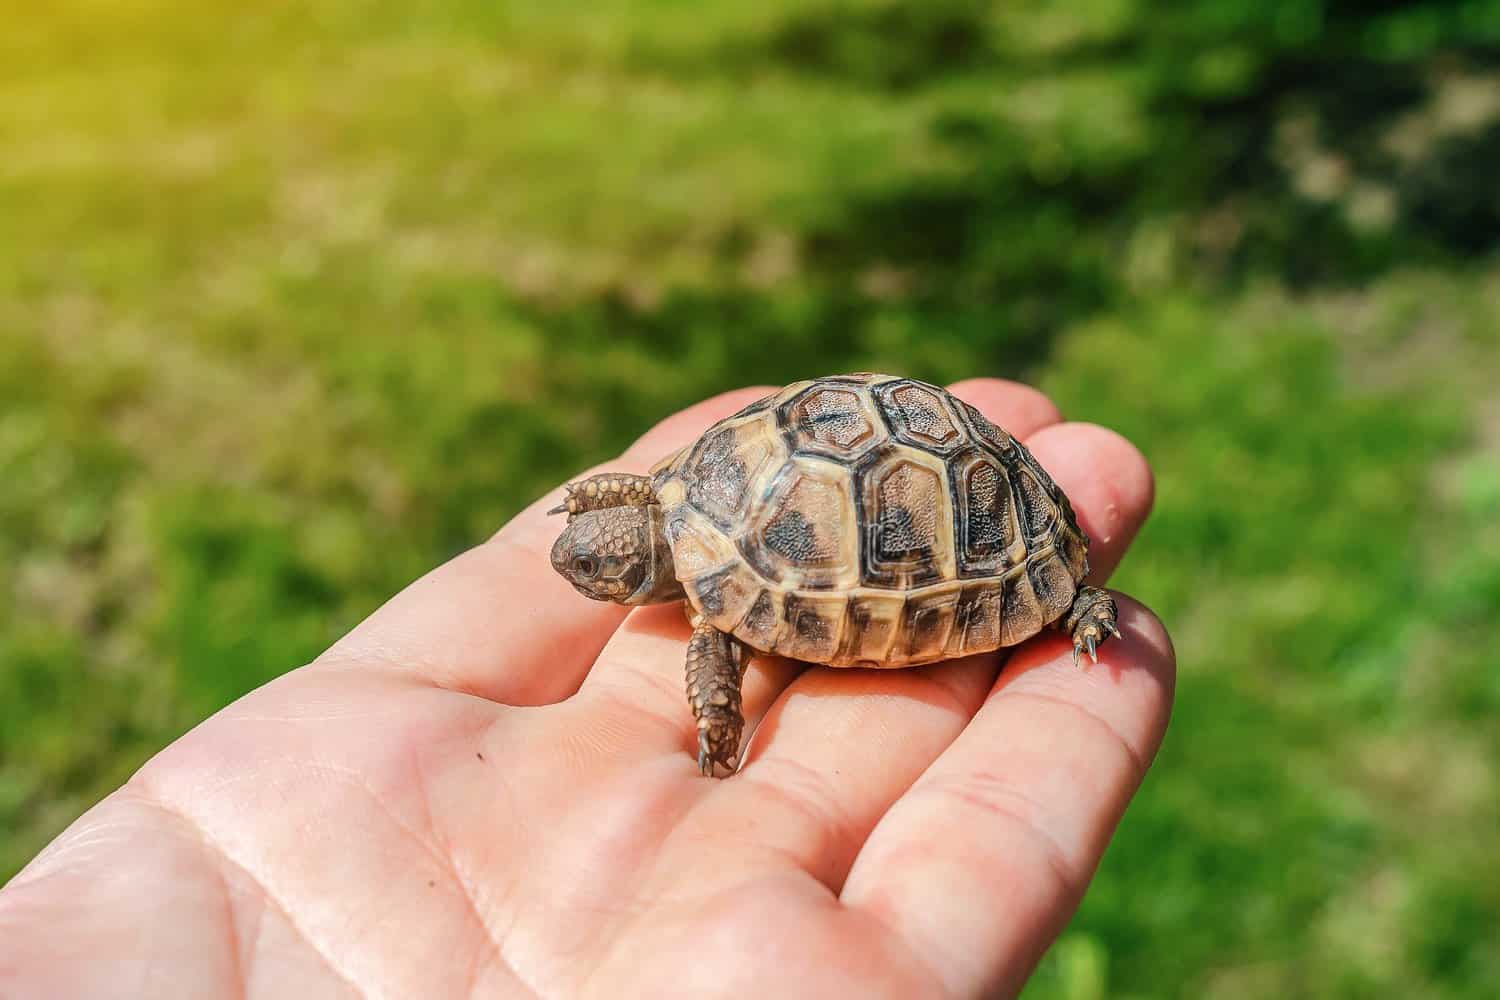 cutest turtle